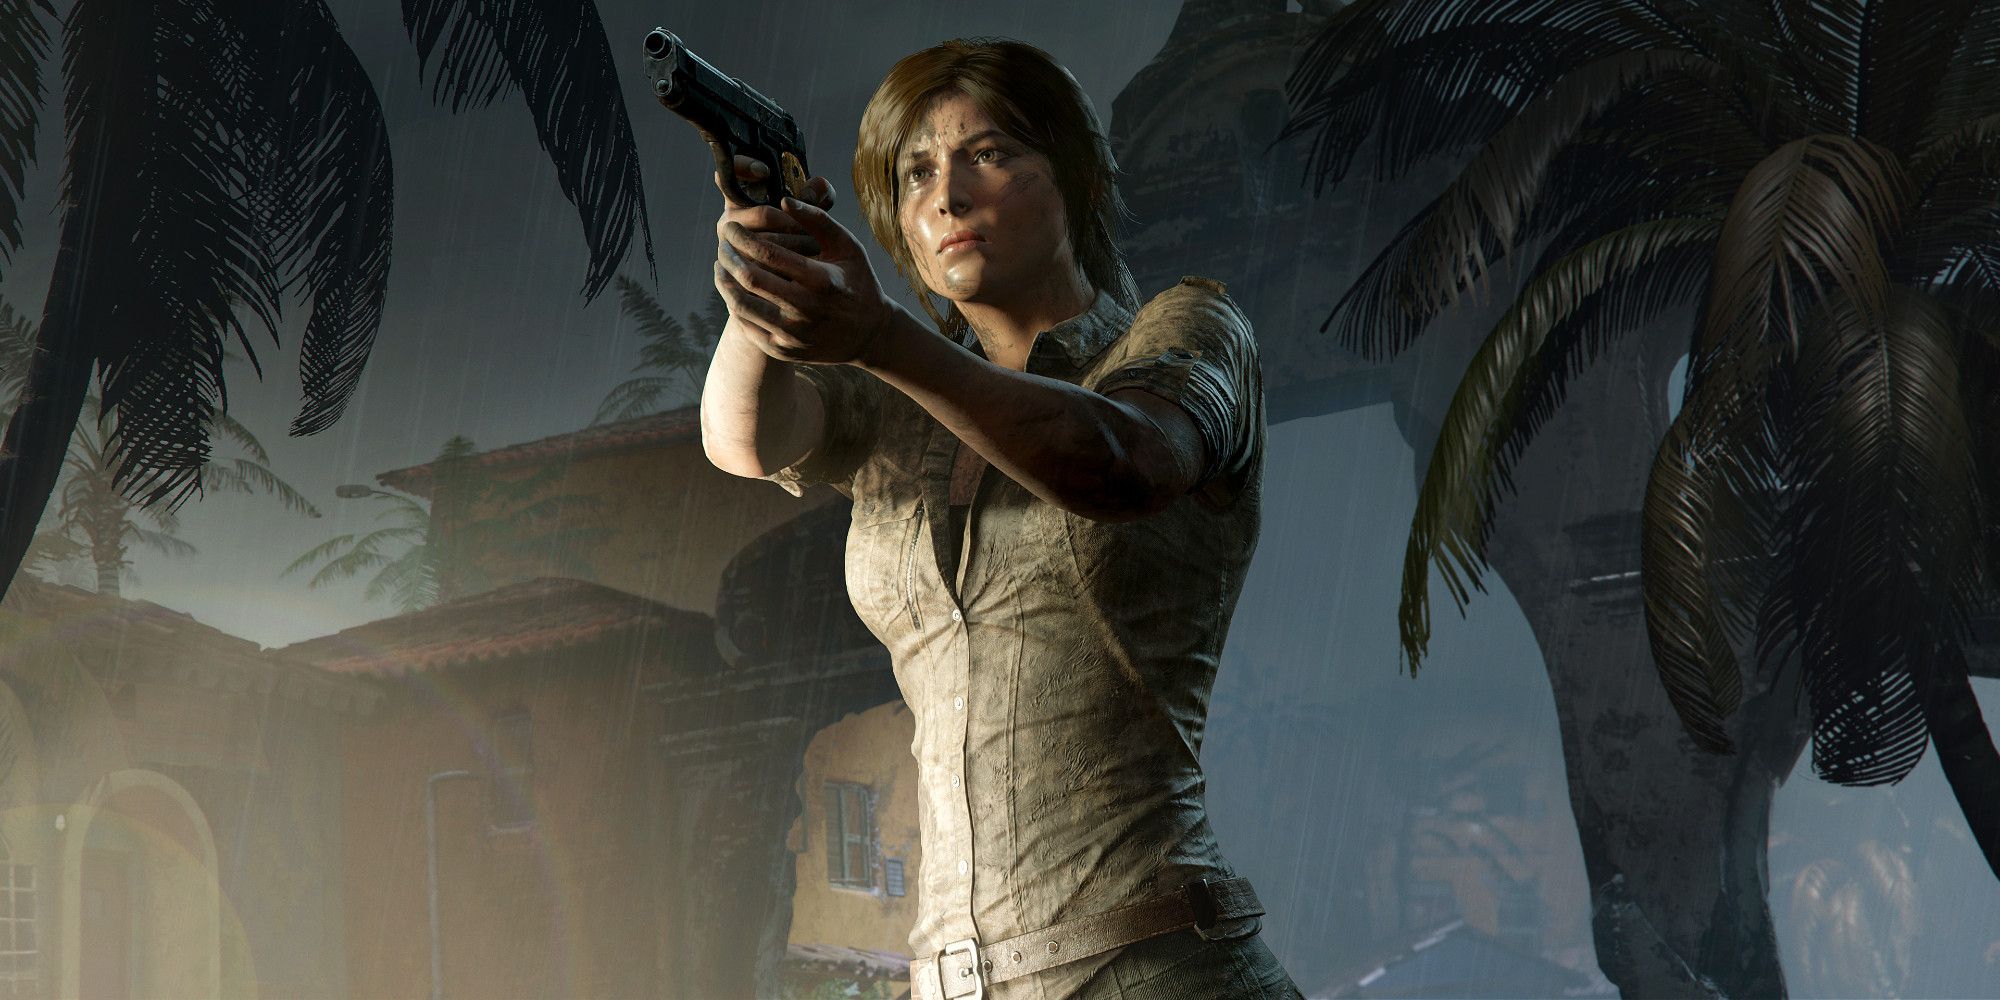 Lara Croft aiming a gun in Shadow of the Tomb Raider.